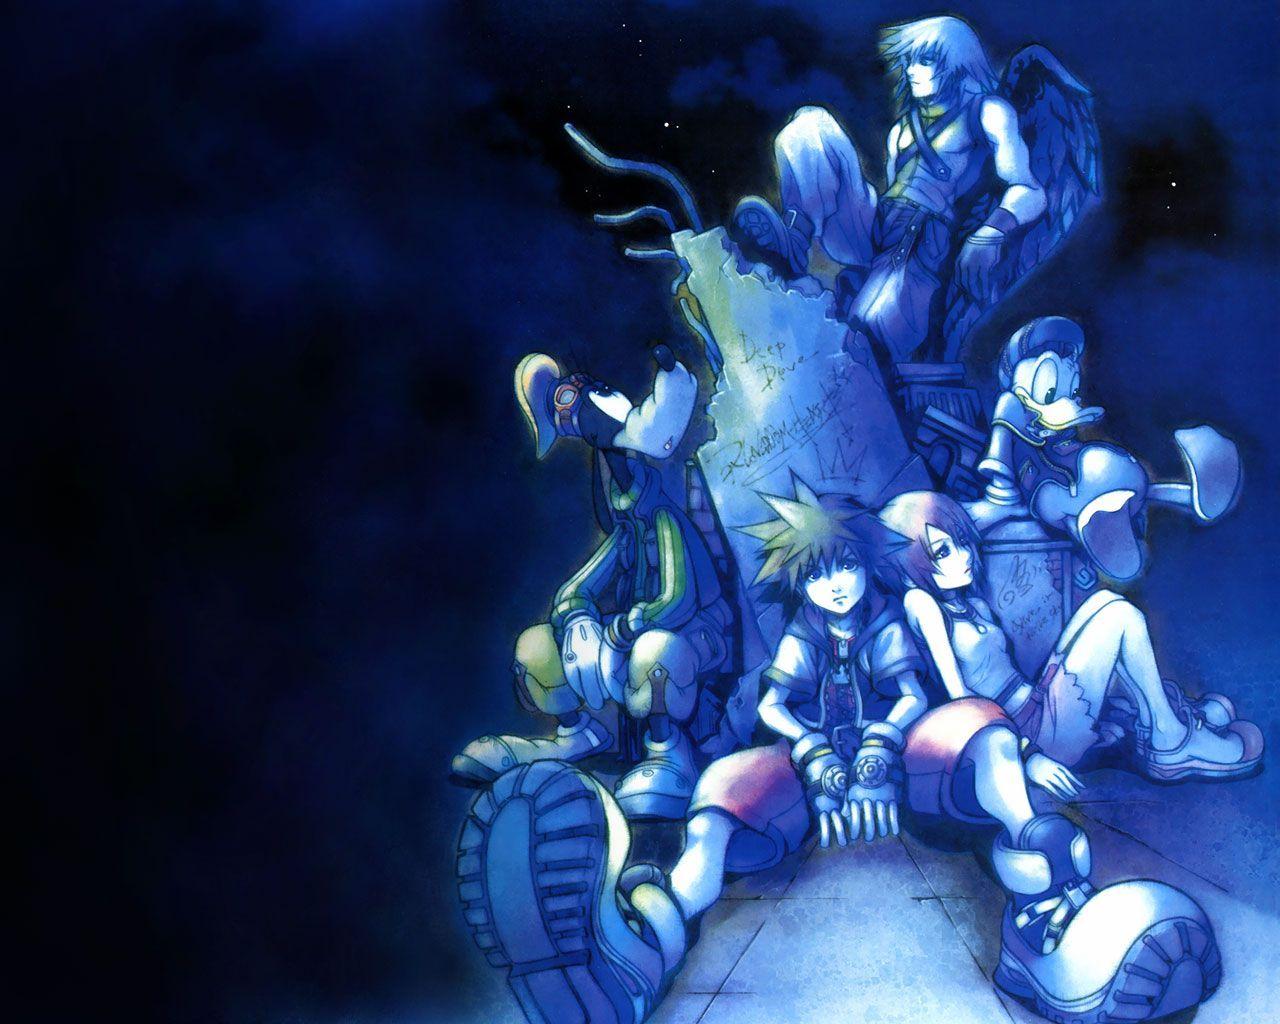 Kingdom Hearts 3 Wallpapers Wallpaper Cave